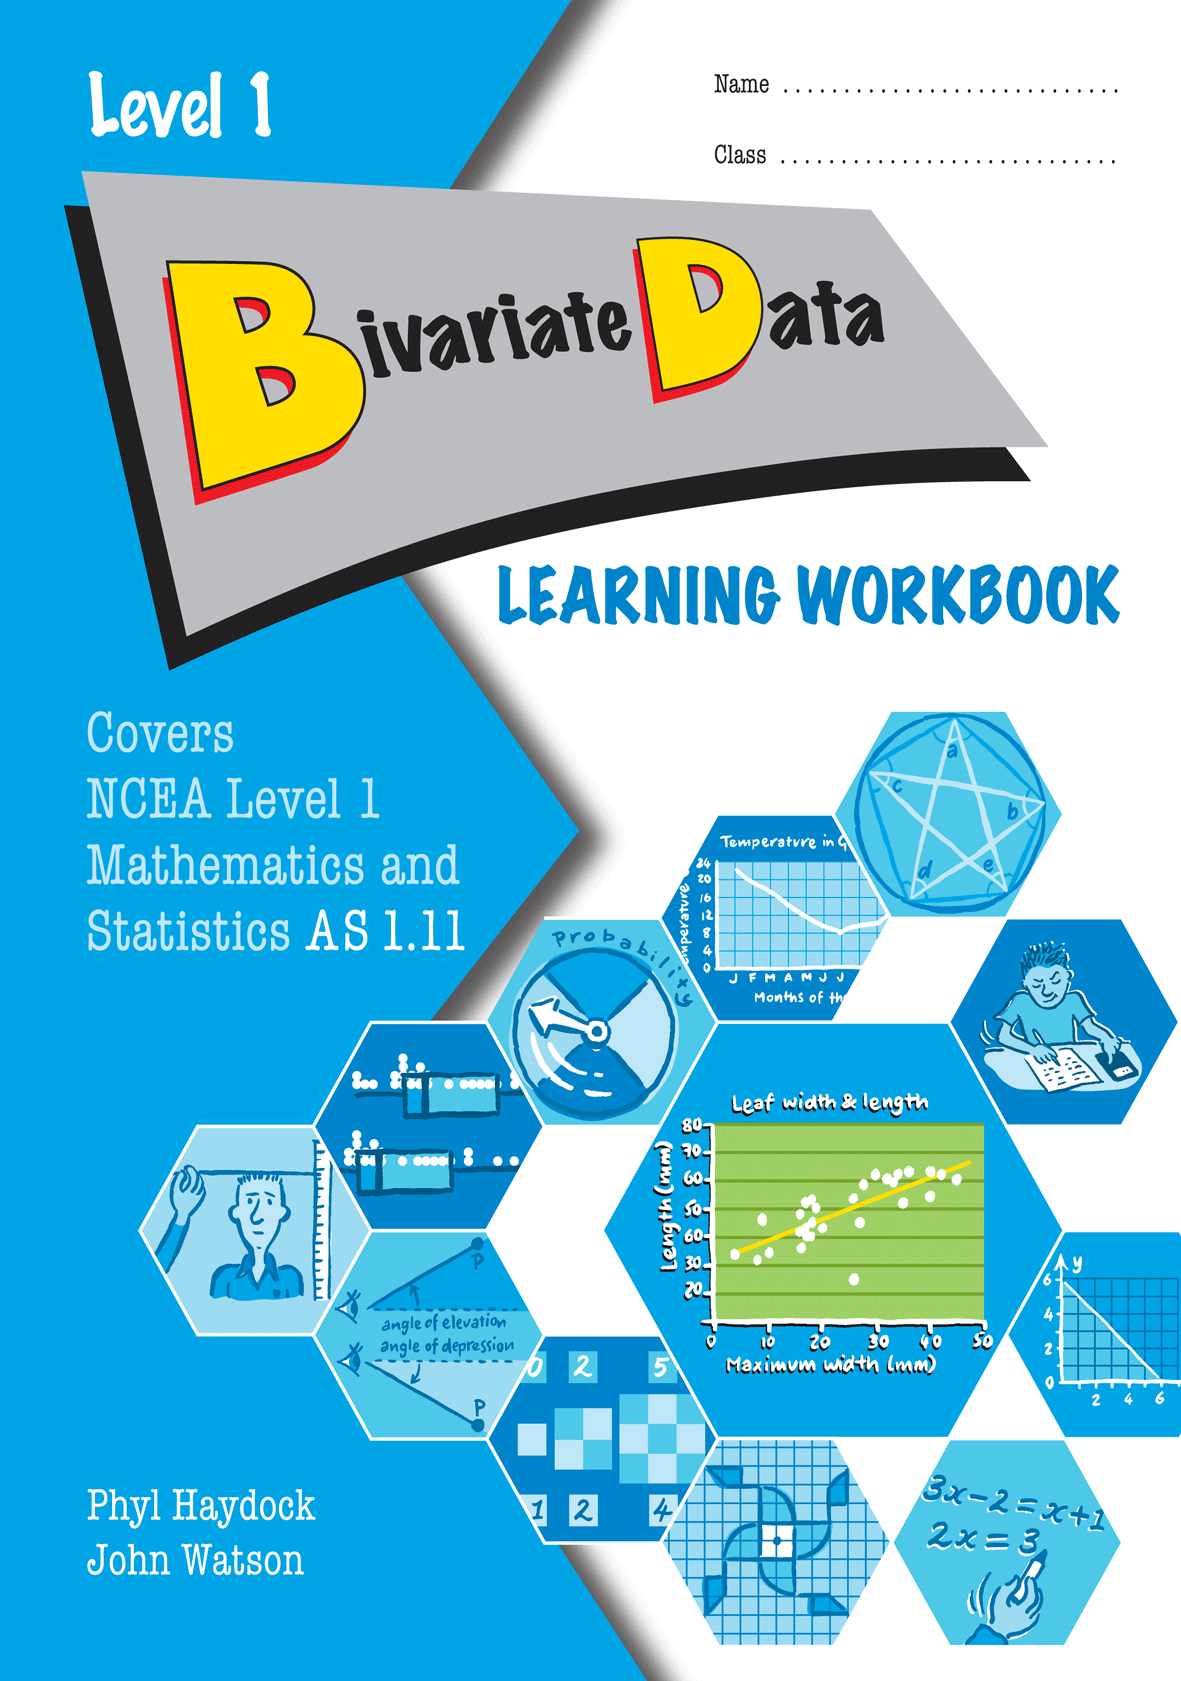 Level 1 Bivariate Data 1.11 Learning Workbook